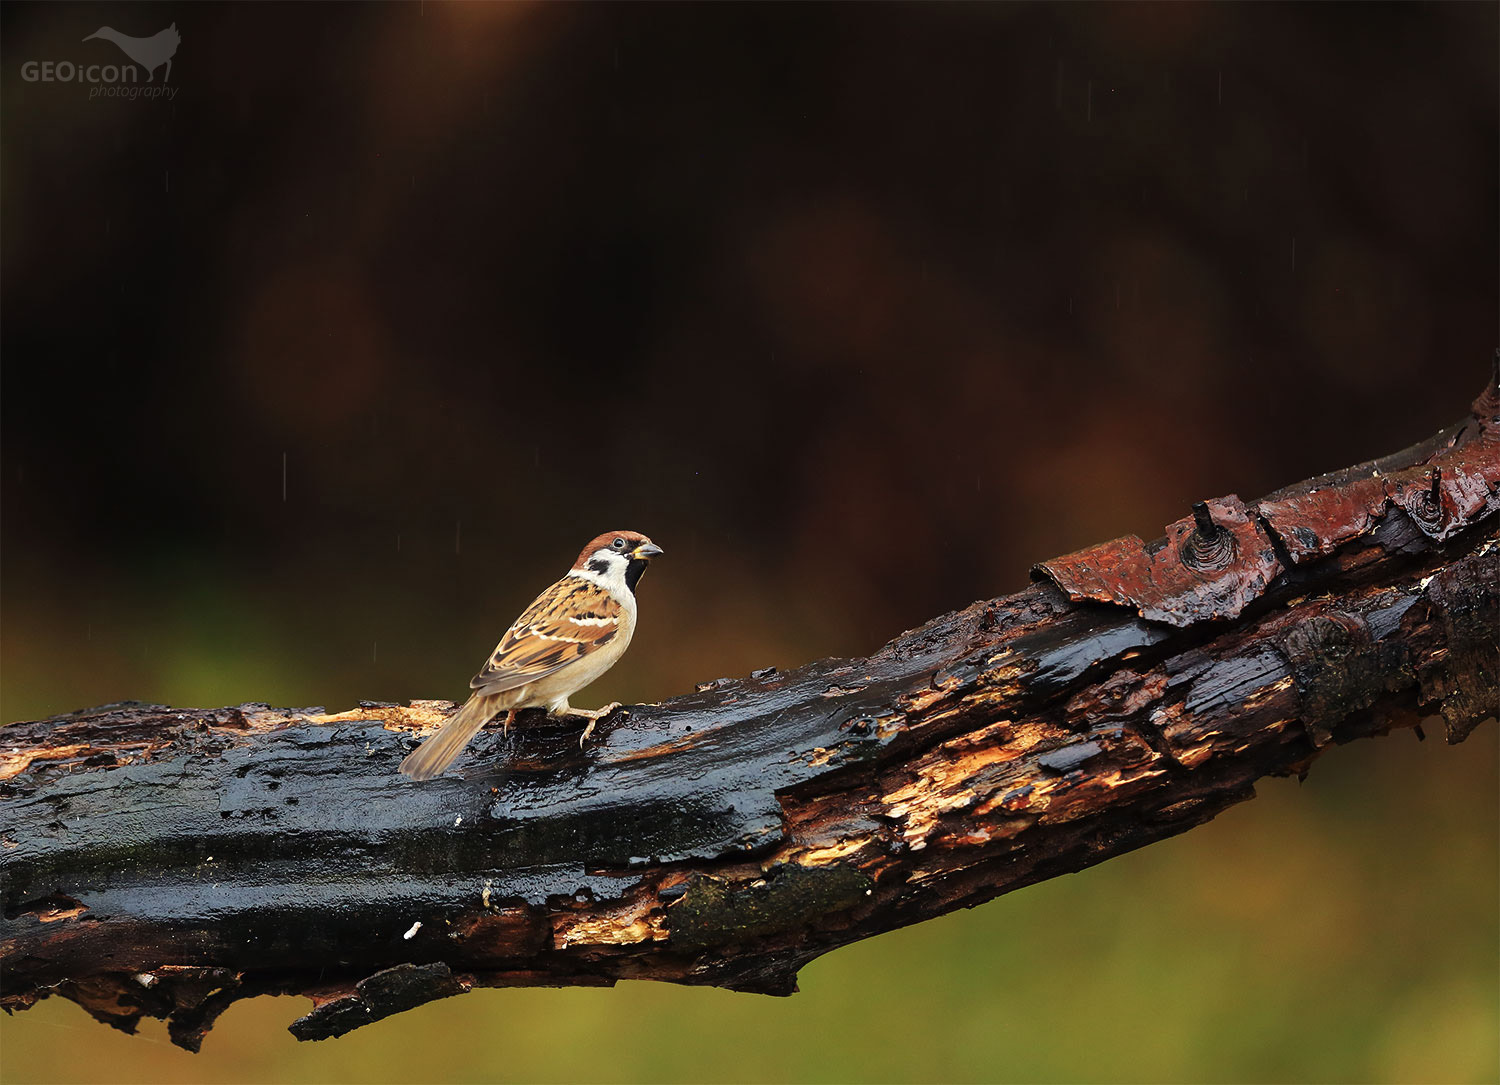 Tree sparrow / vrabec polní (Passer montanus)